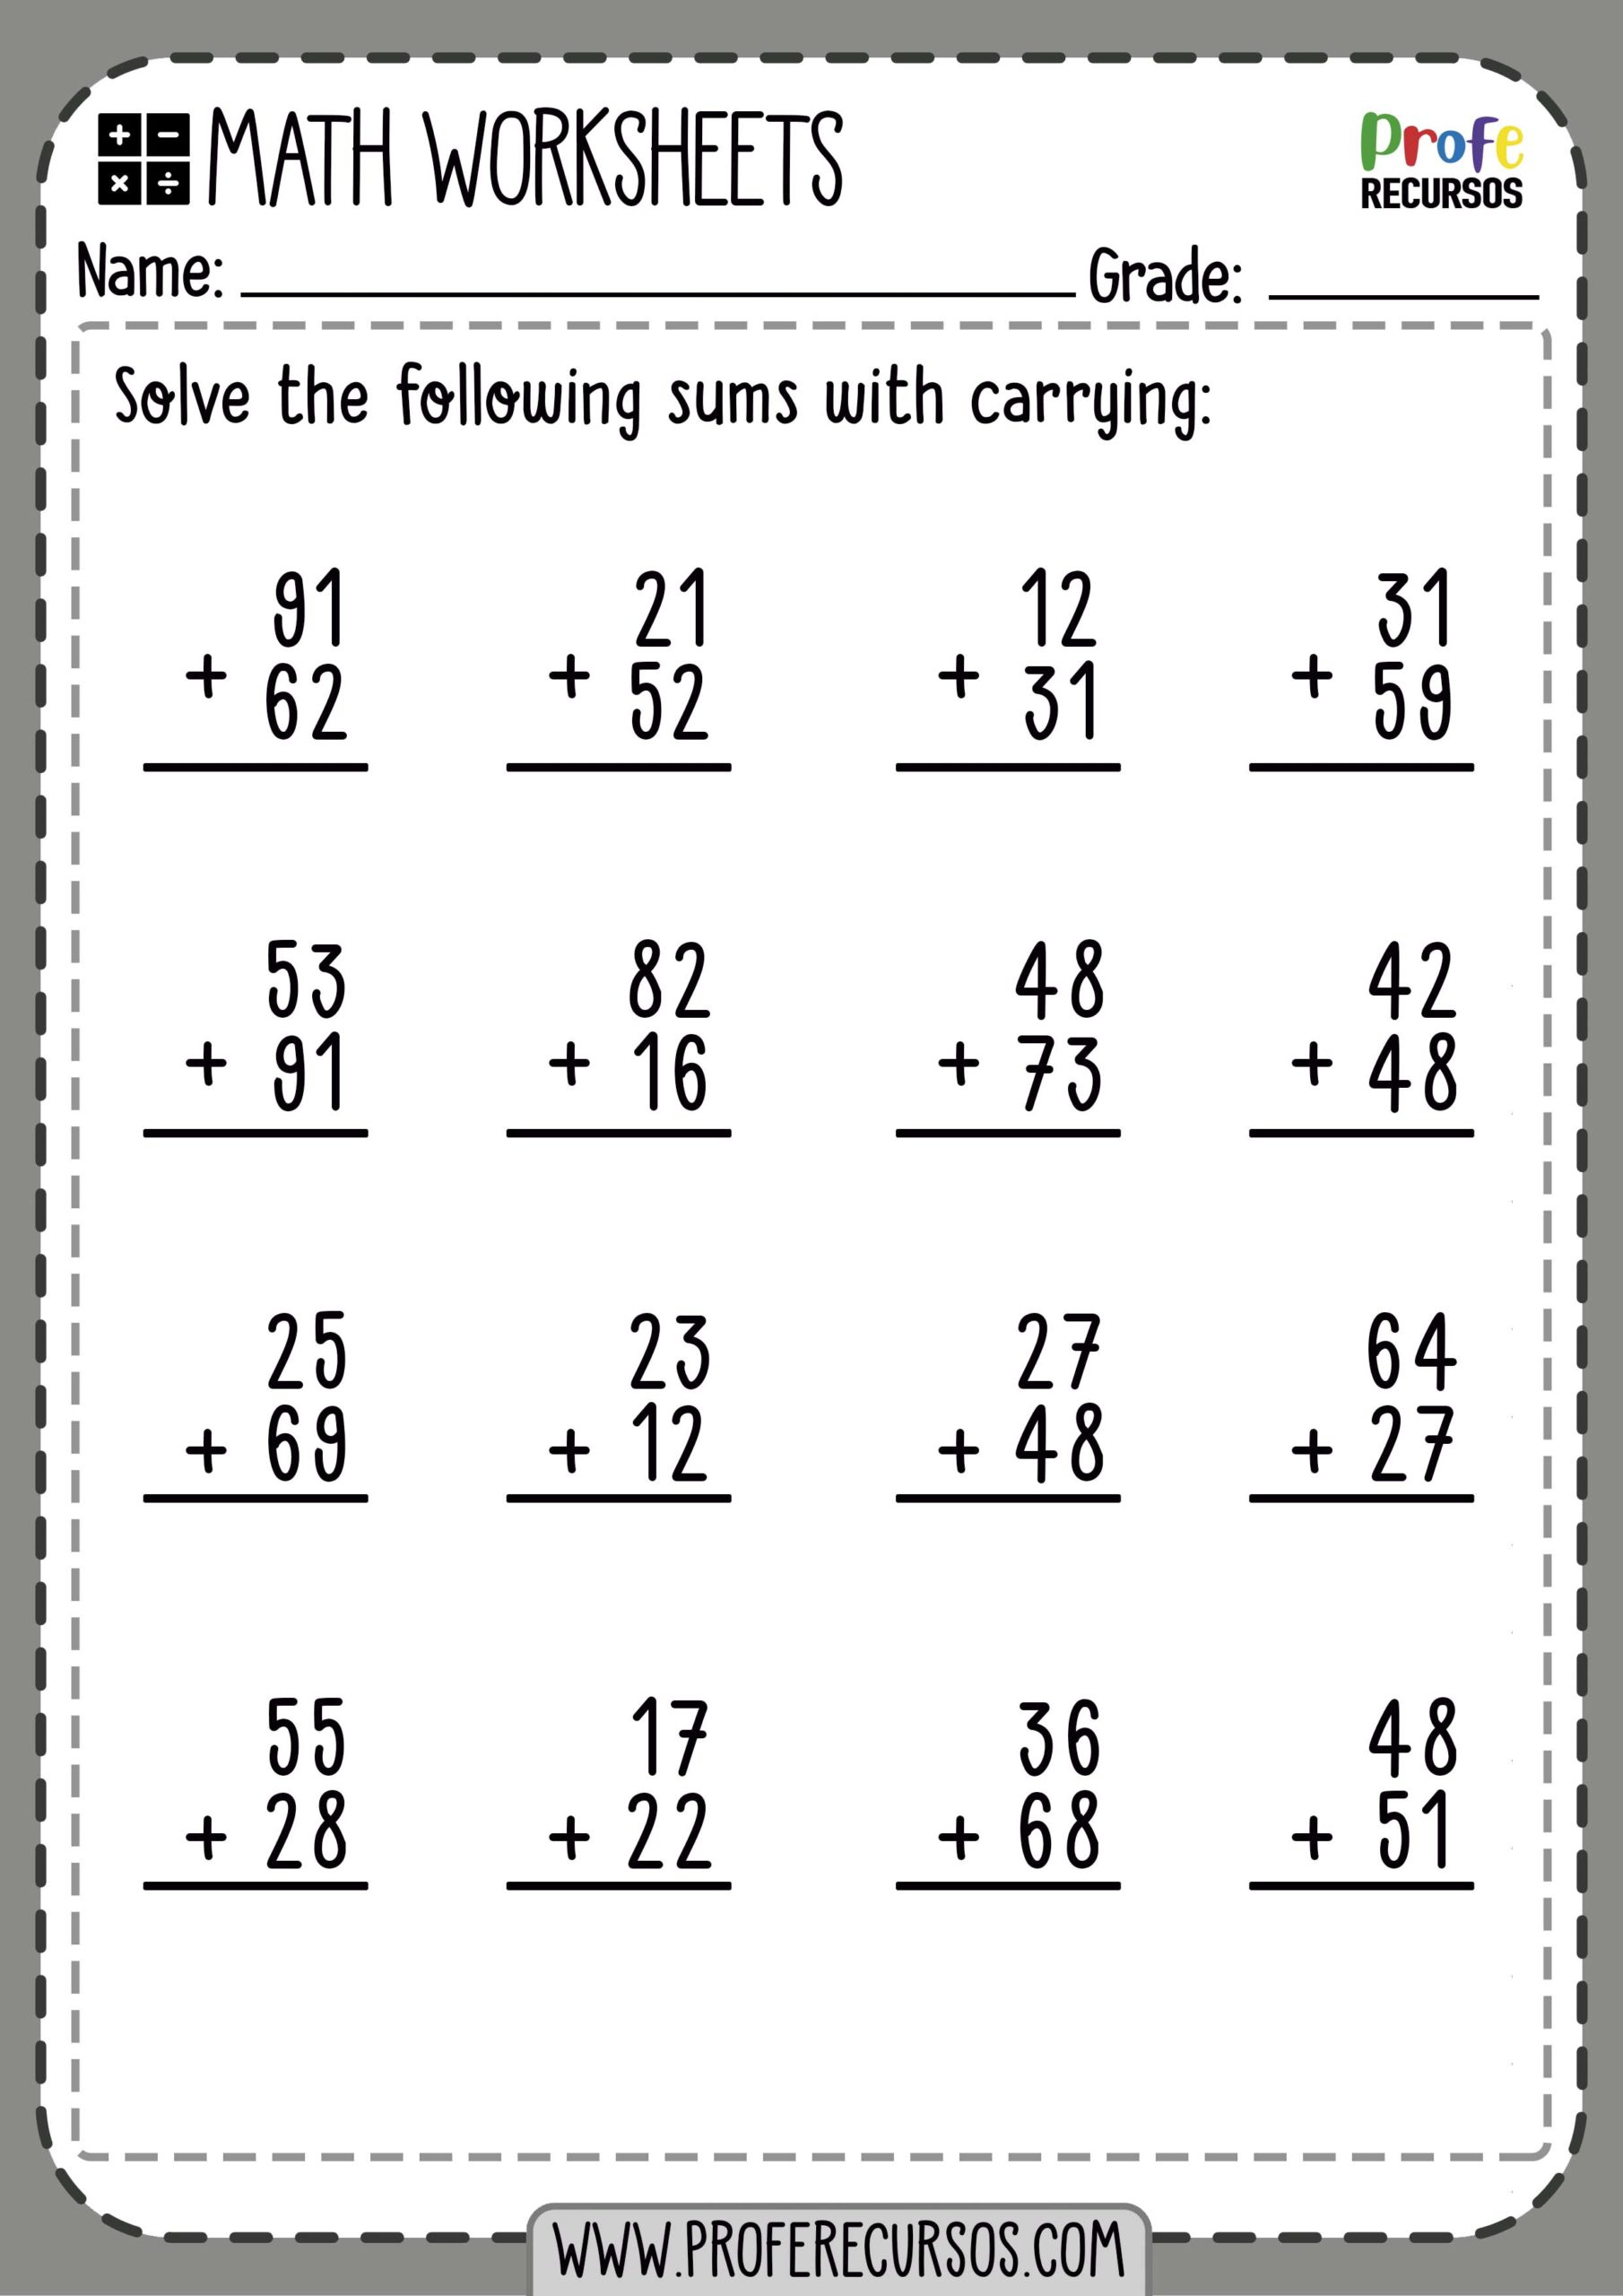 maths-worksheets-for-grade-1-addition-addition-worksheets-for-grade-1-activity-shelter